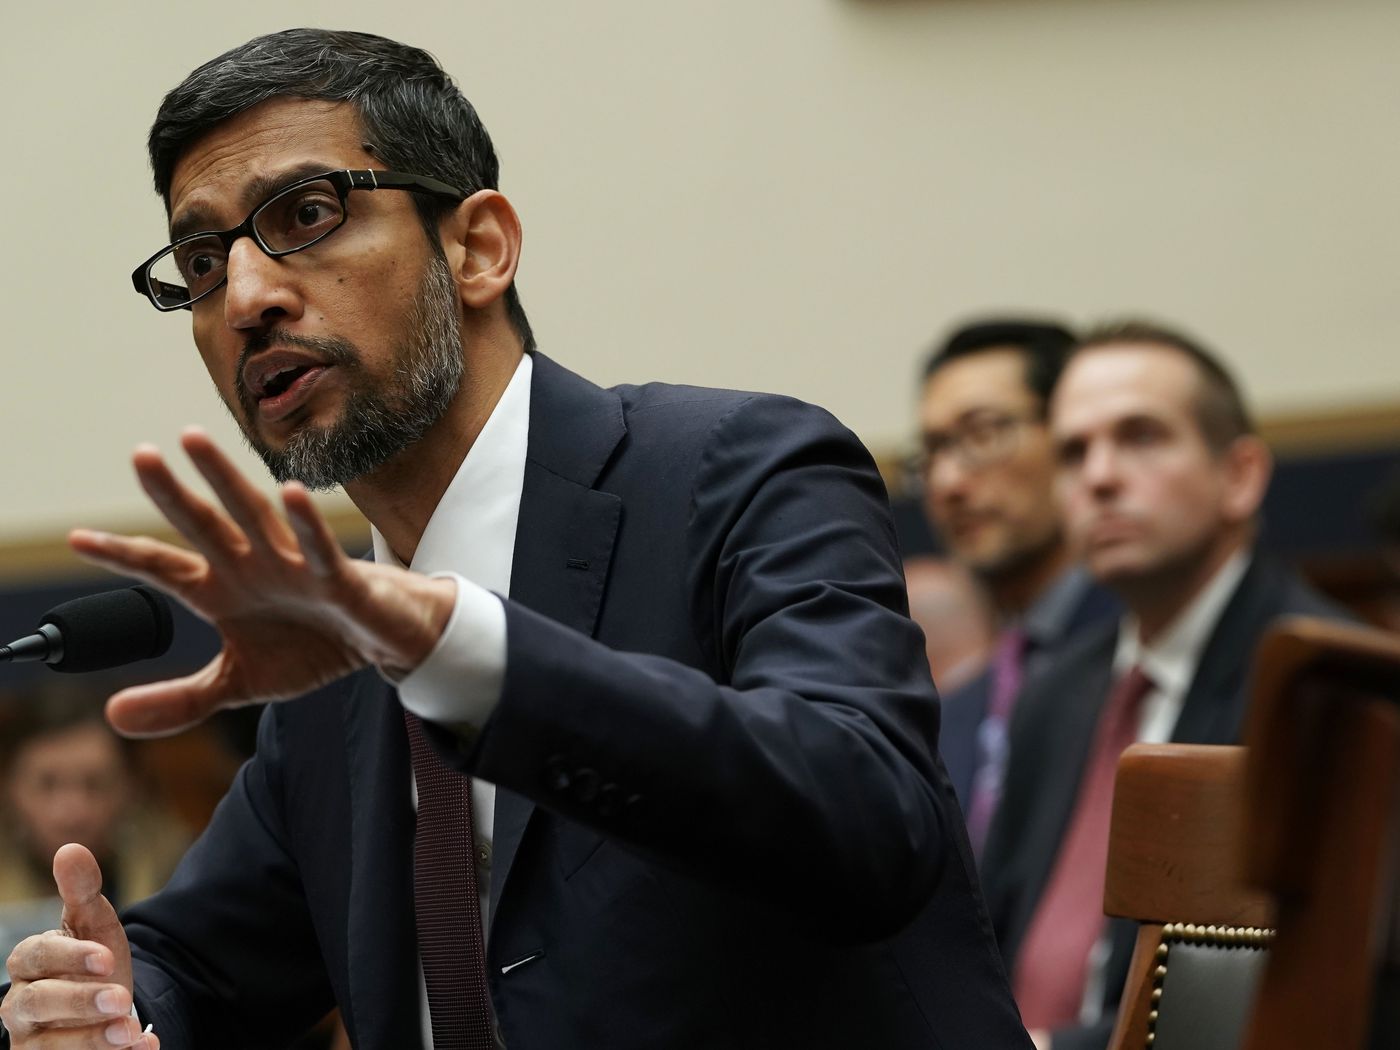 Google CEO Sundar Pichai booked for Copyright Act violation